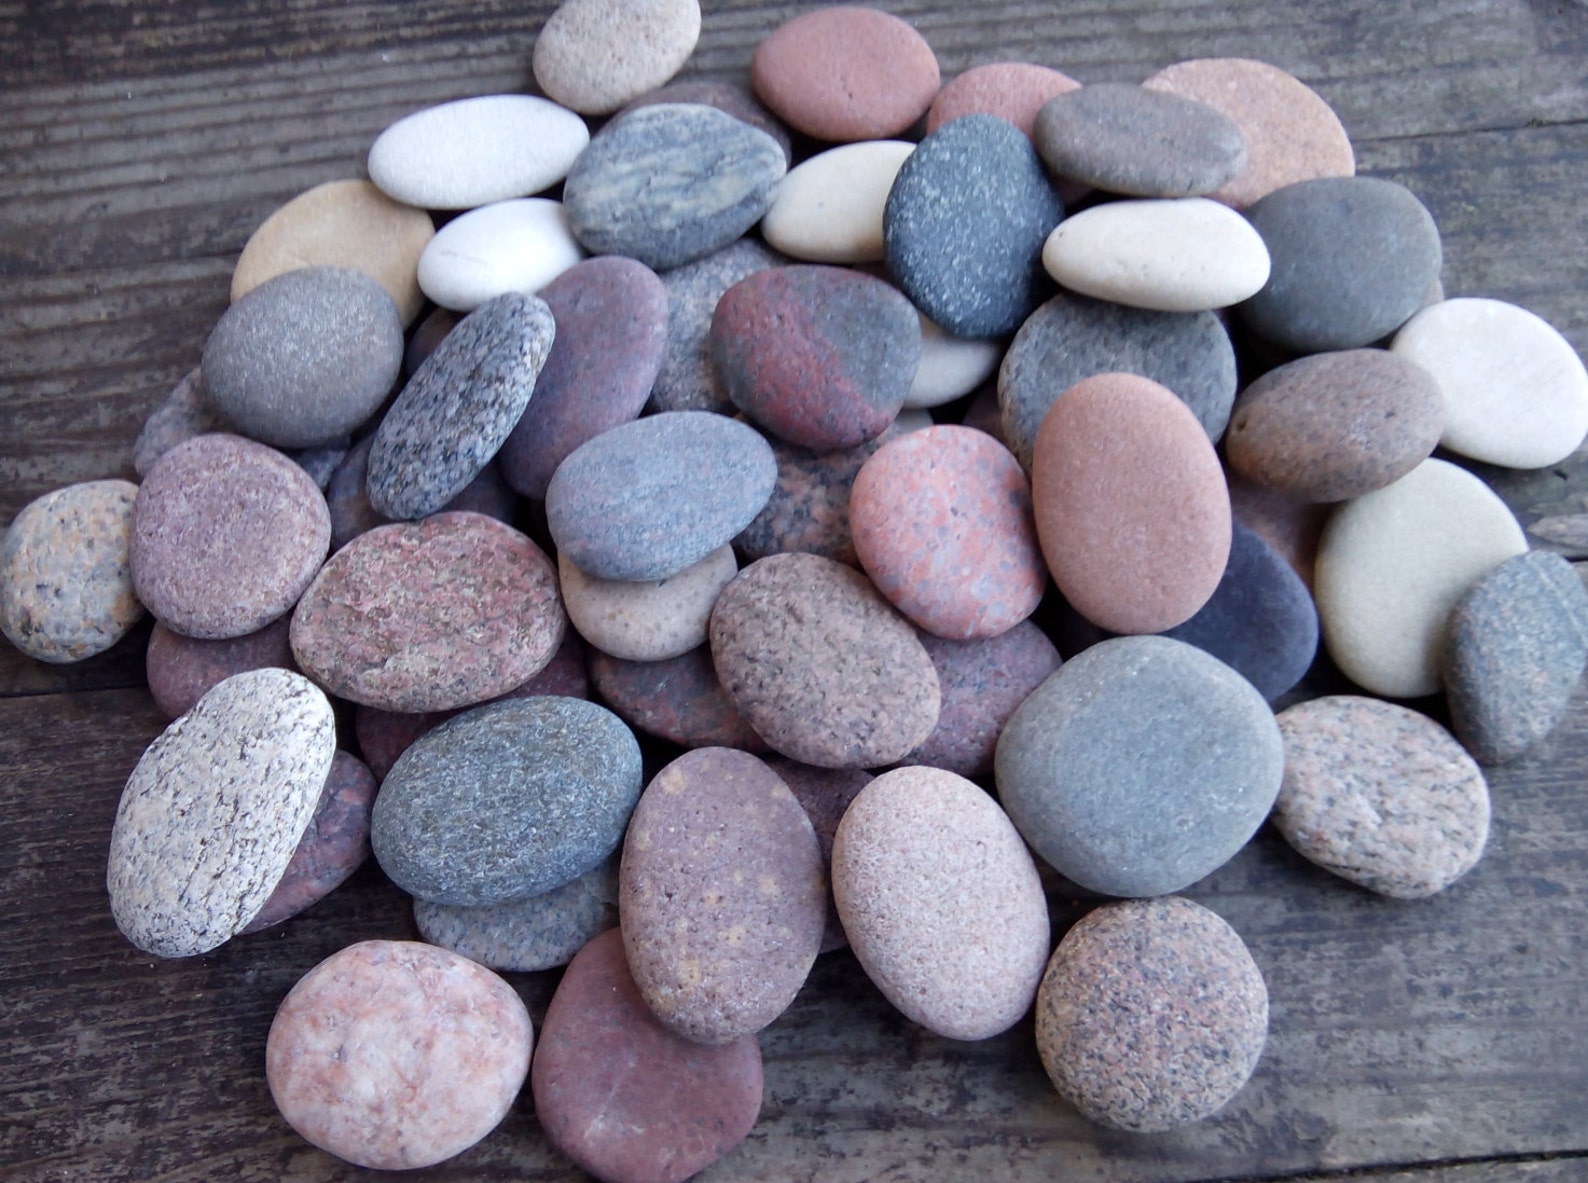 Small stones. Плоский камень. Круглая галька. Круглый плоский камень. Плоские морские камни.